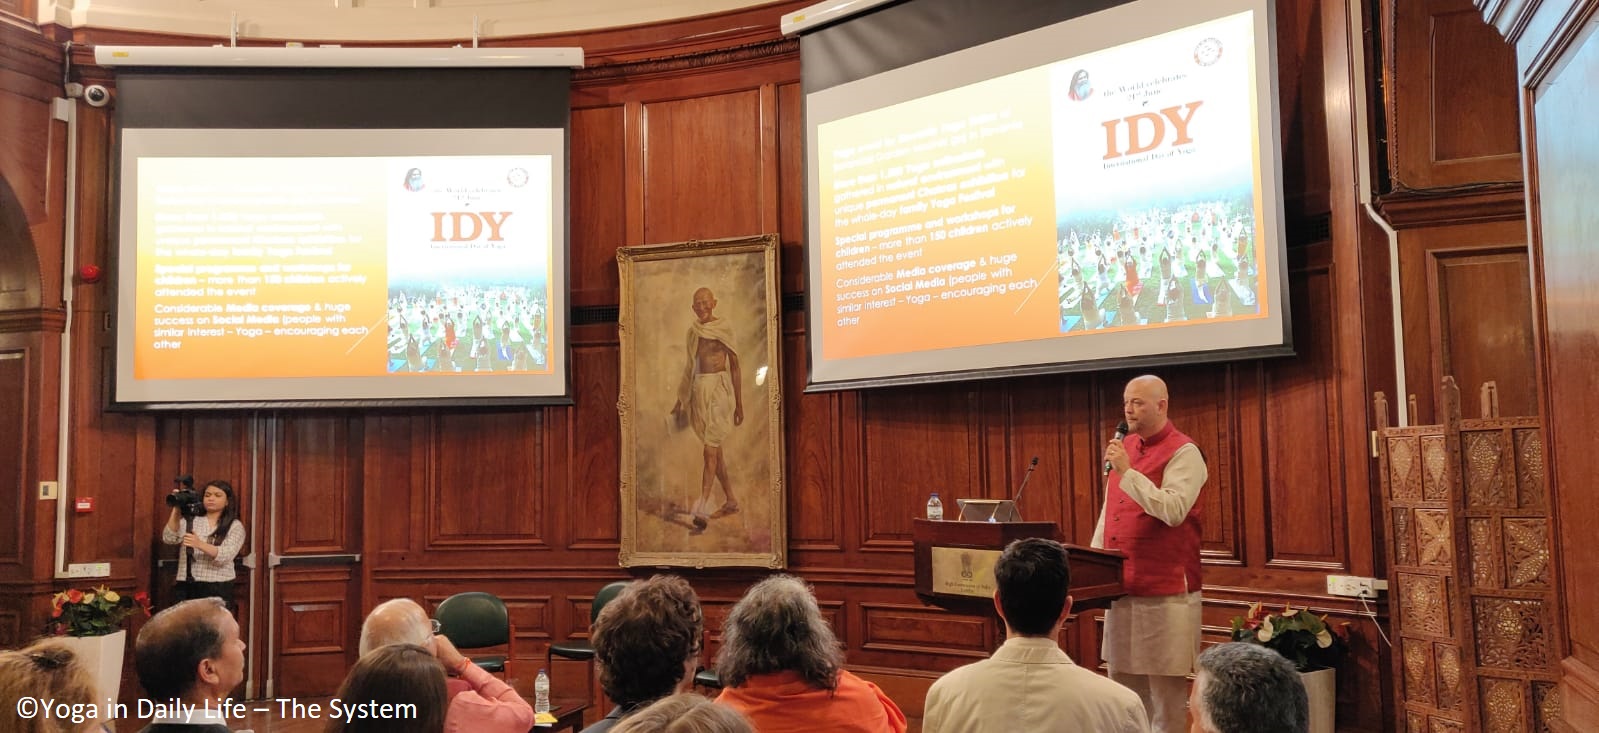 IDY 2019 Yoga Conference, India House, London - Dr Gregor Kos (Sugandpuri) presents YIDL around the world